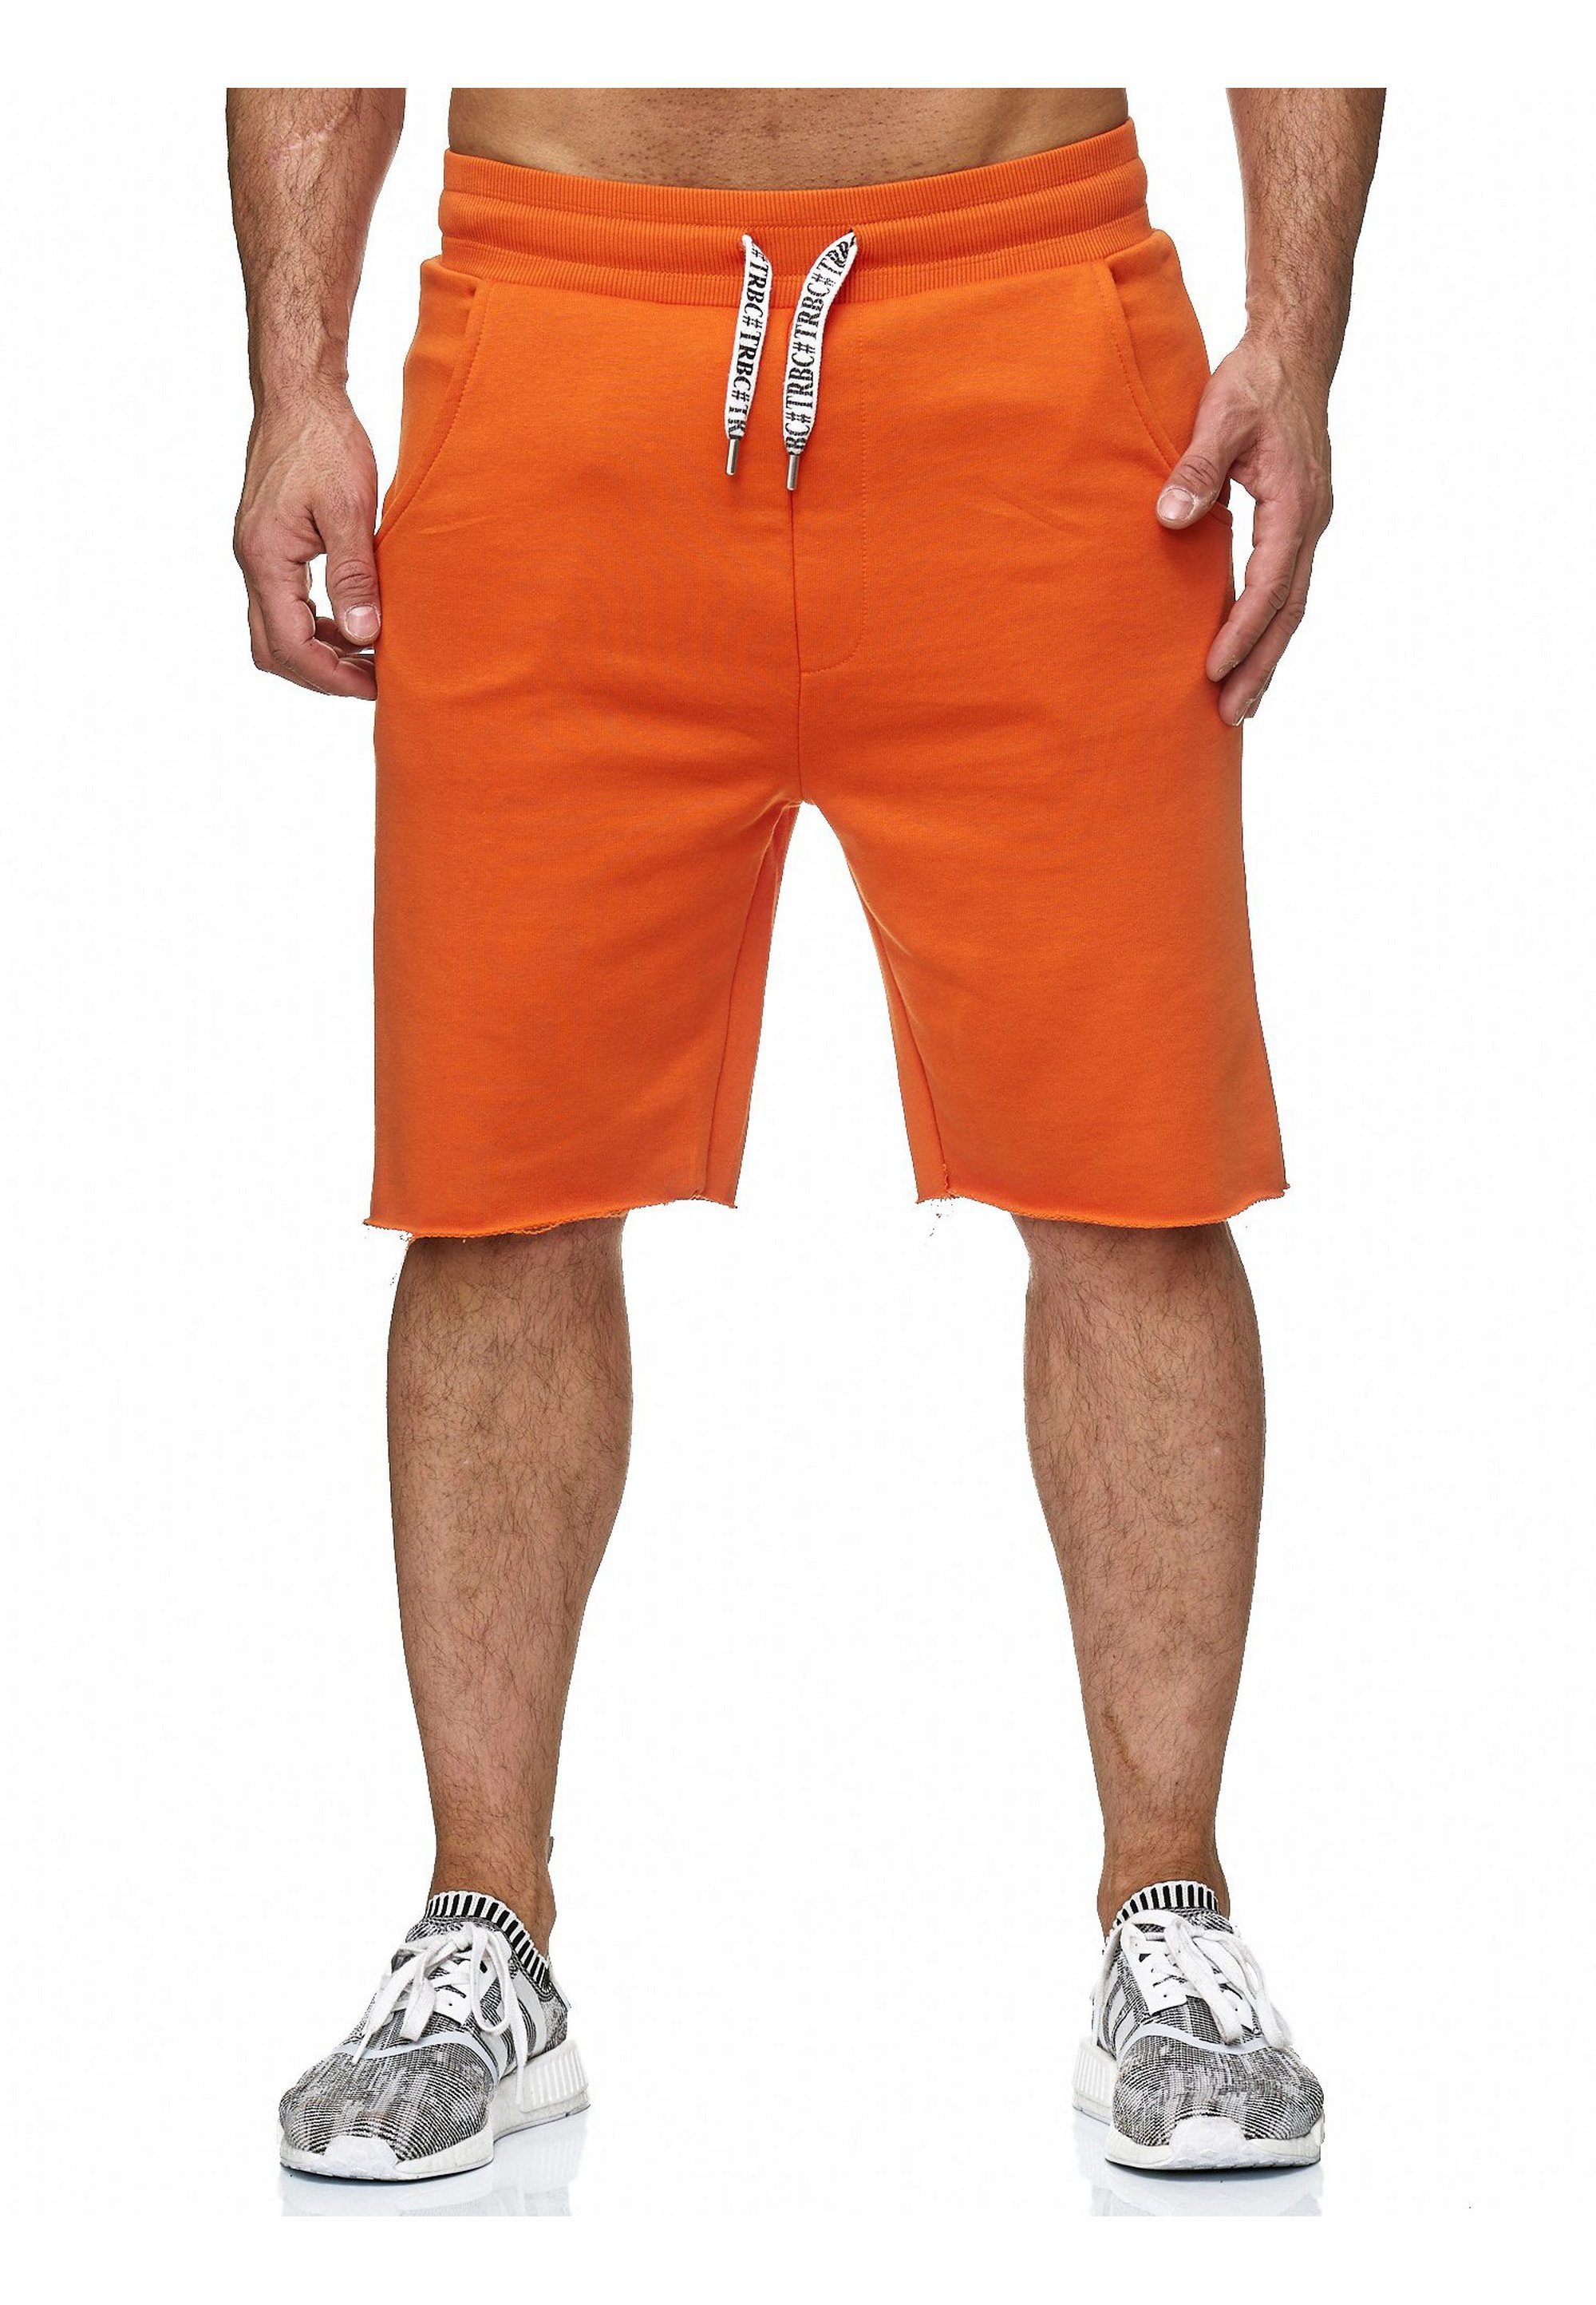 Aurora Saum breitem orange Shorts mit RedBridge